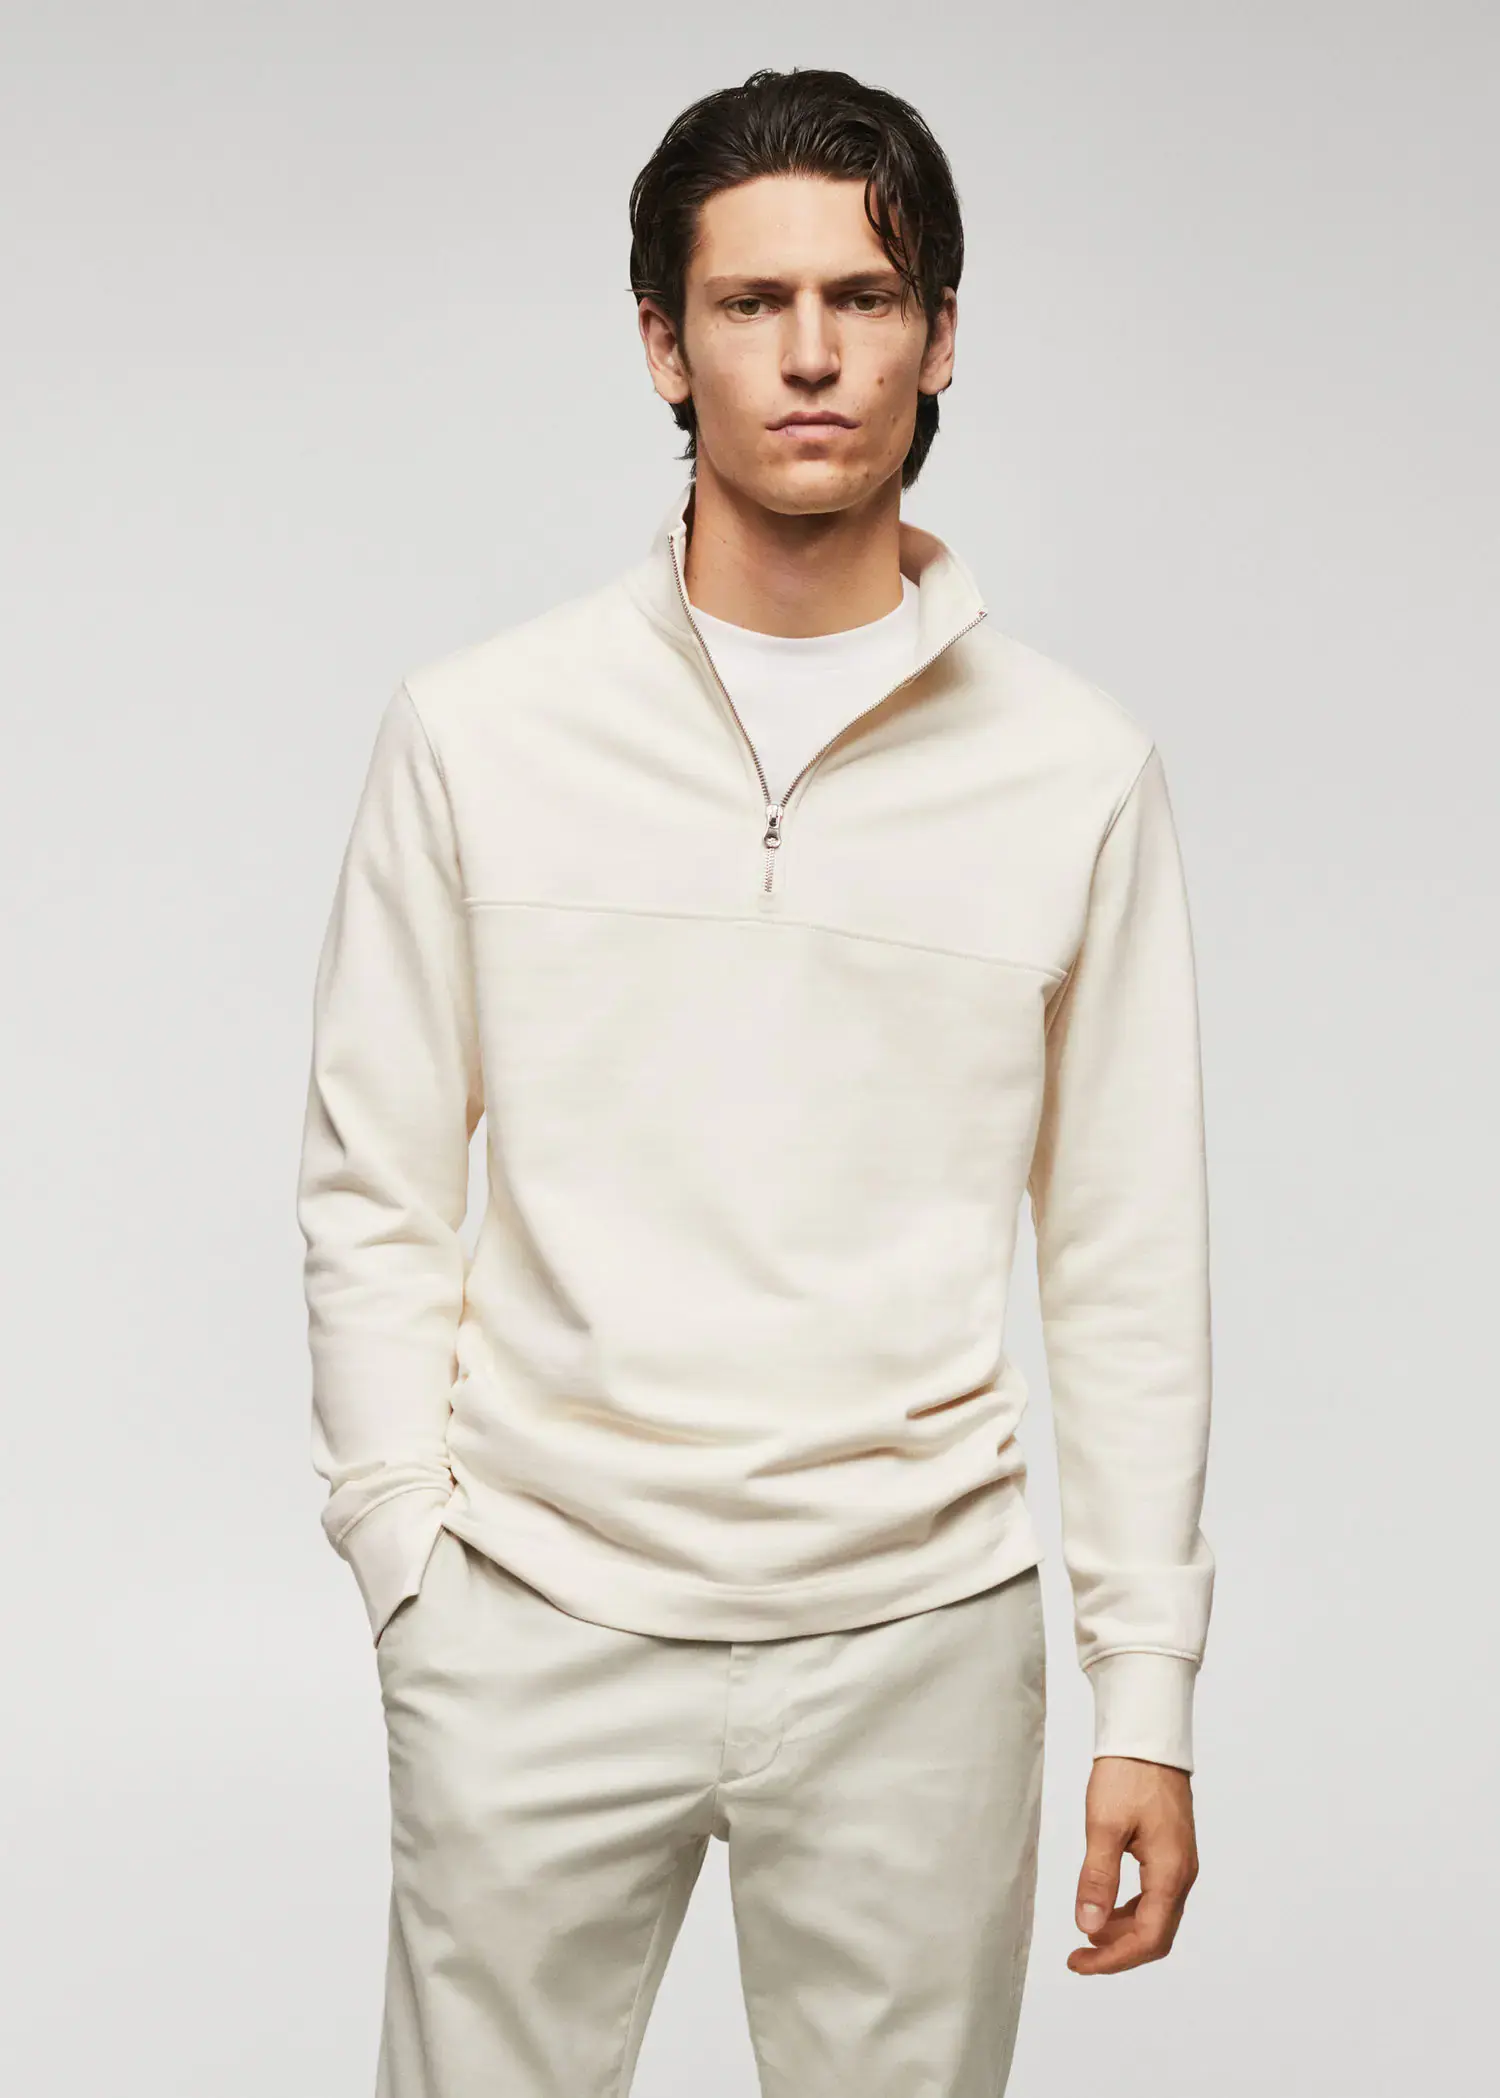 Mango Cotton sweatshirt with zipper neck. a man wearing a white shirt and a white jacket. 